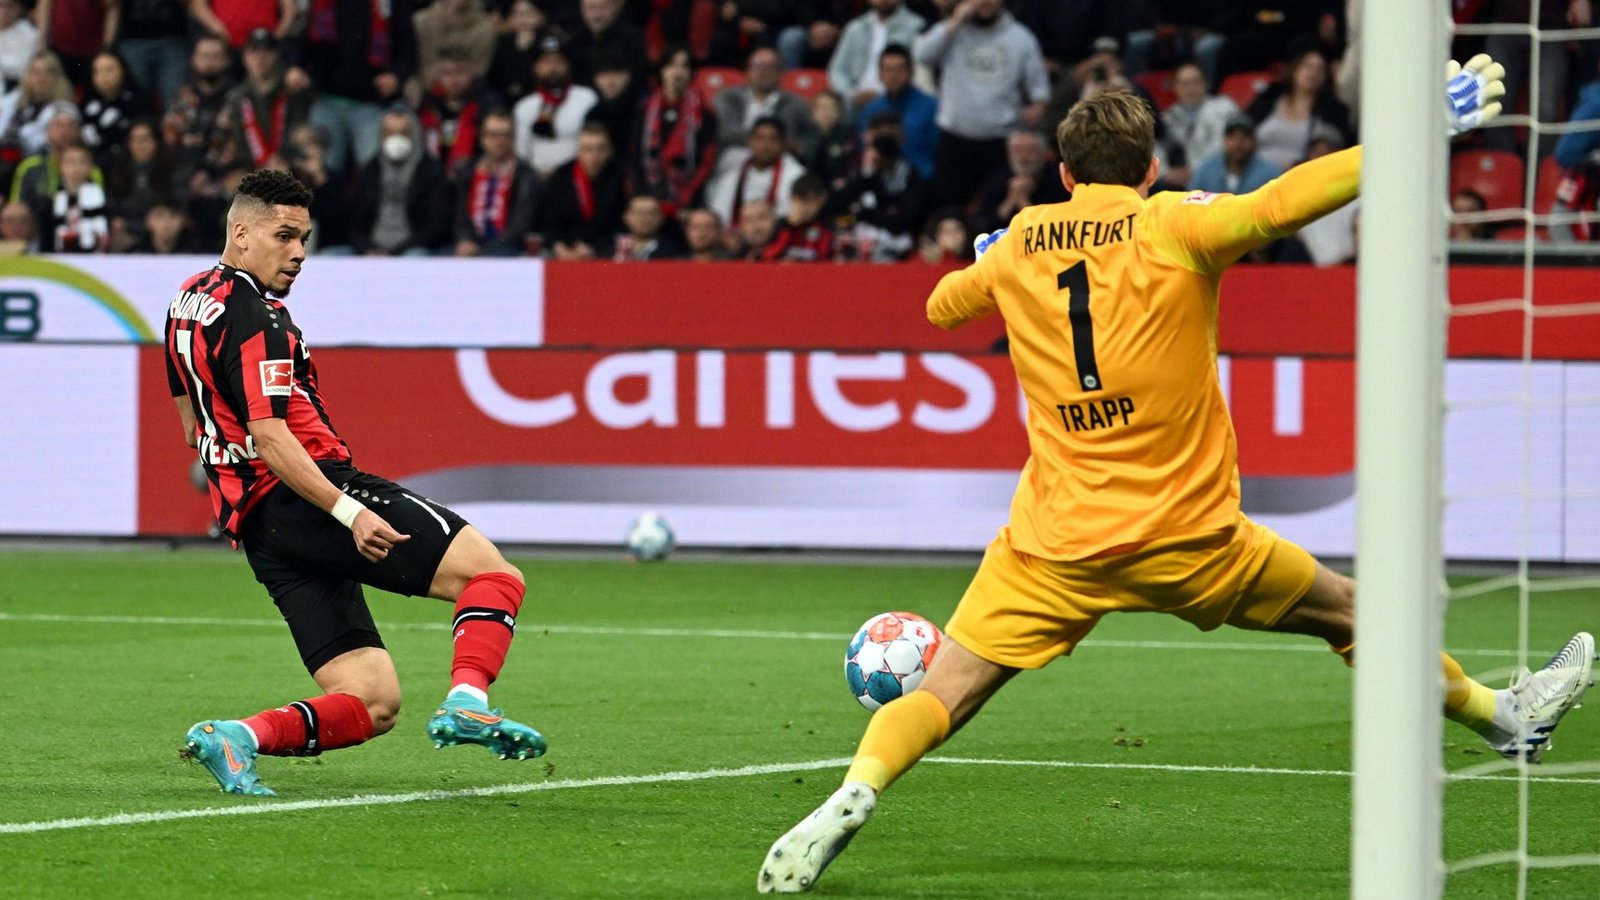 Leverkusens Paulinho (l) erzielt das 1:0 gegen Frankfurts Torhüter Kevin Trapp .Foto: Federico Gambarini/dpa